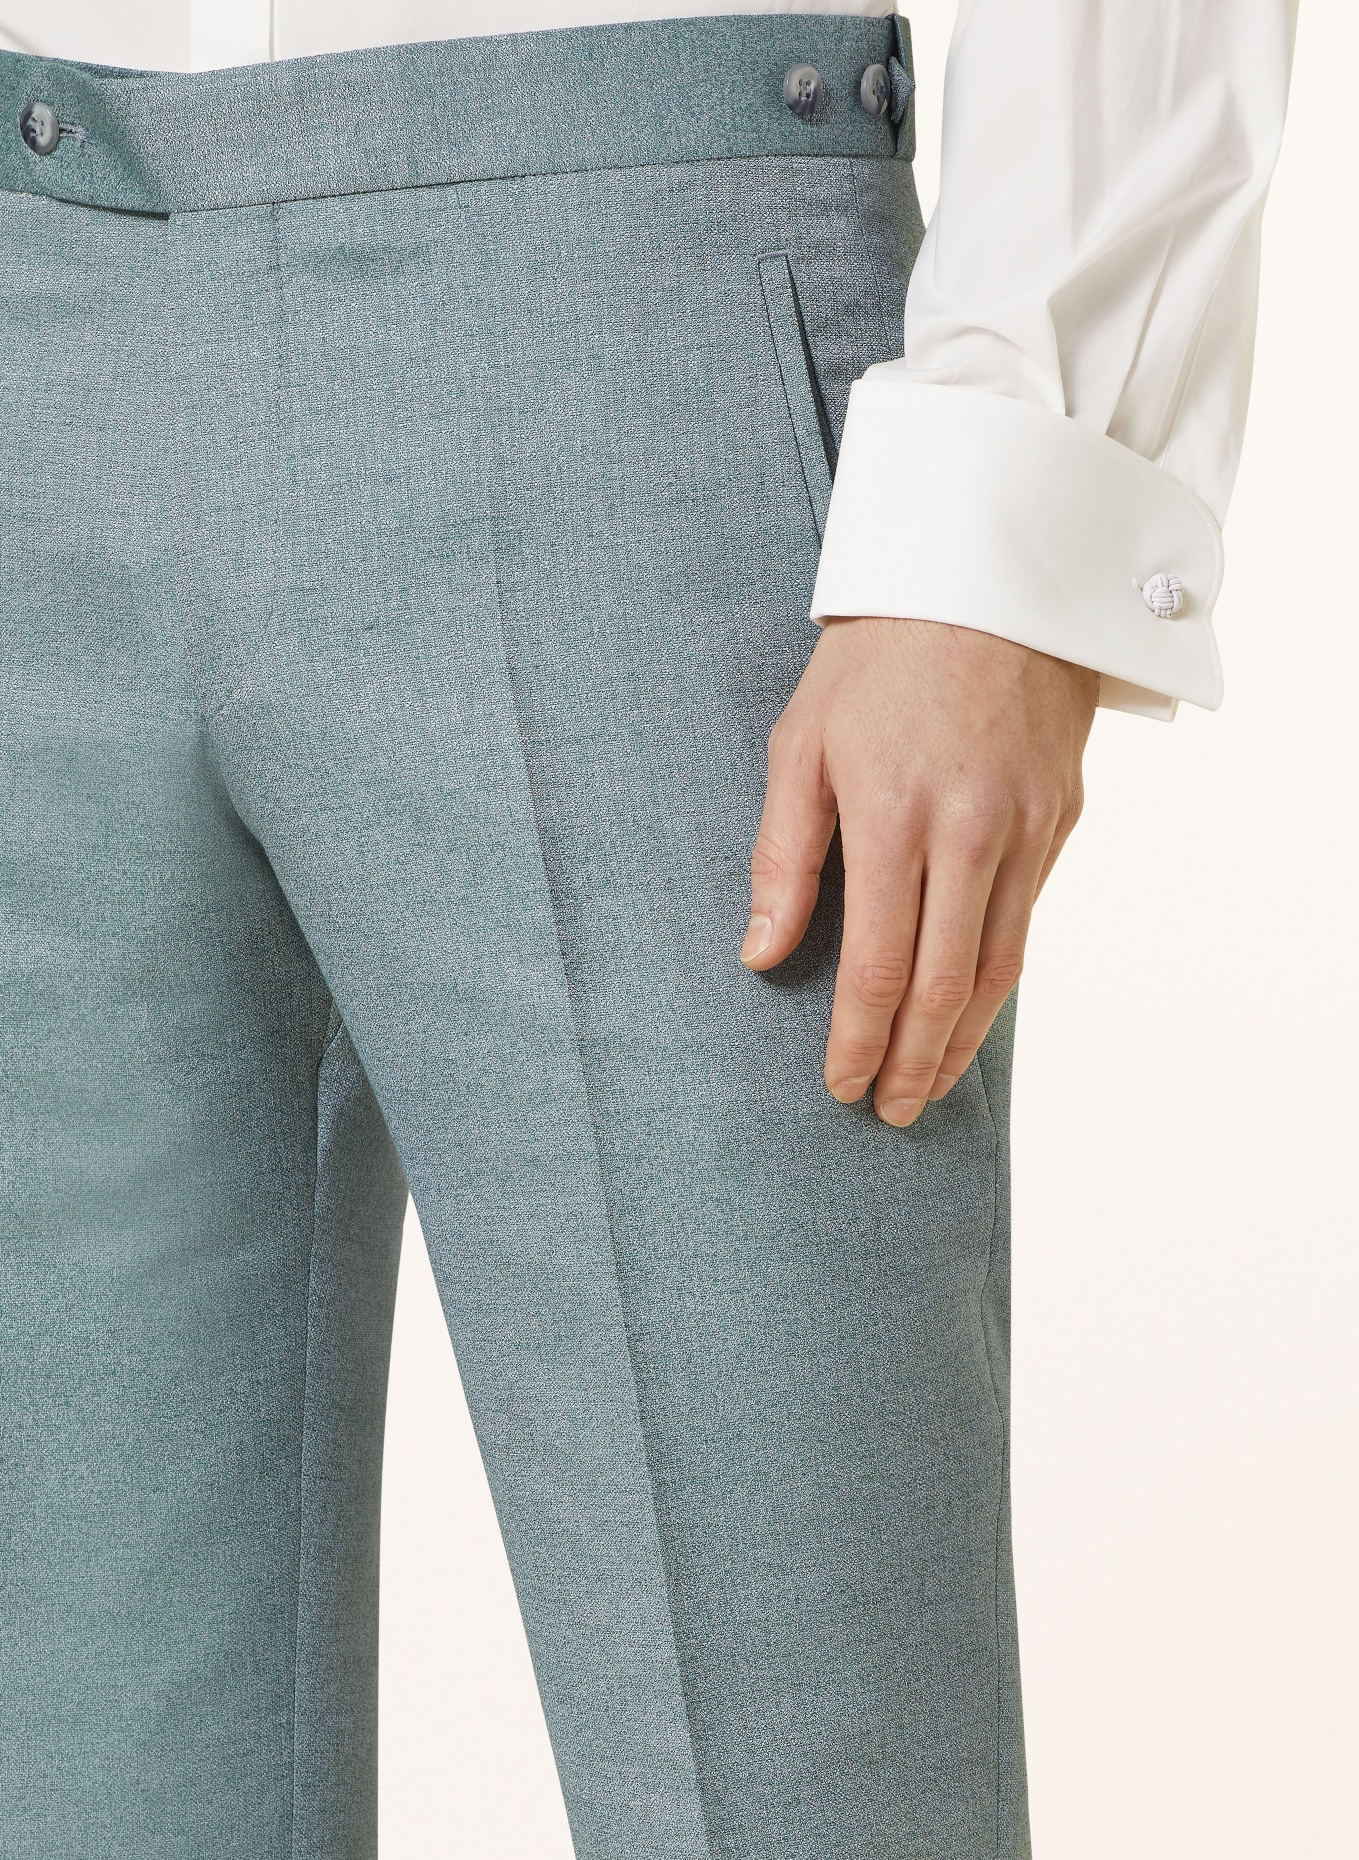 WILVORST Anzughose Extra Slim Fit, Farbe: 045 grün (Bild 6)